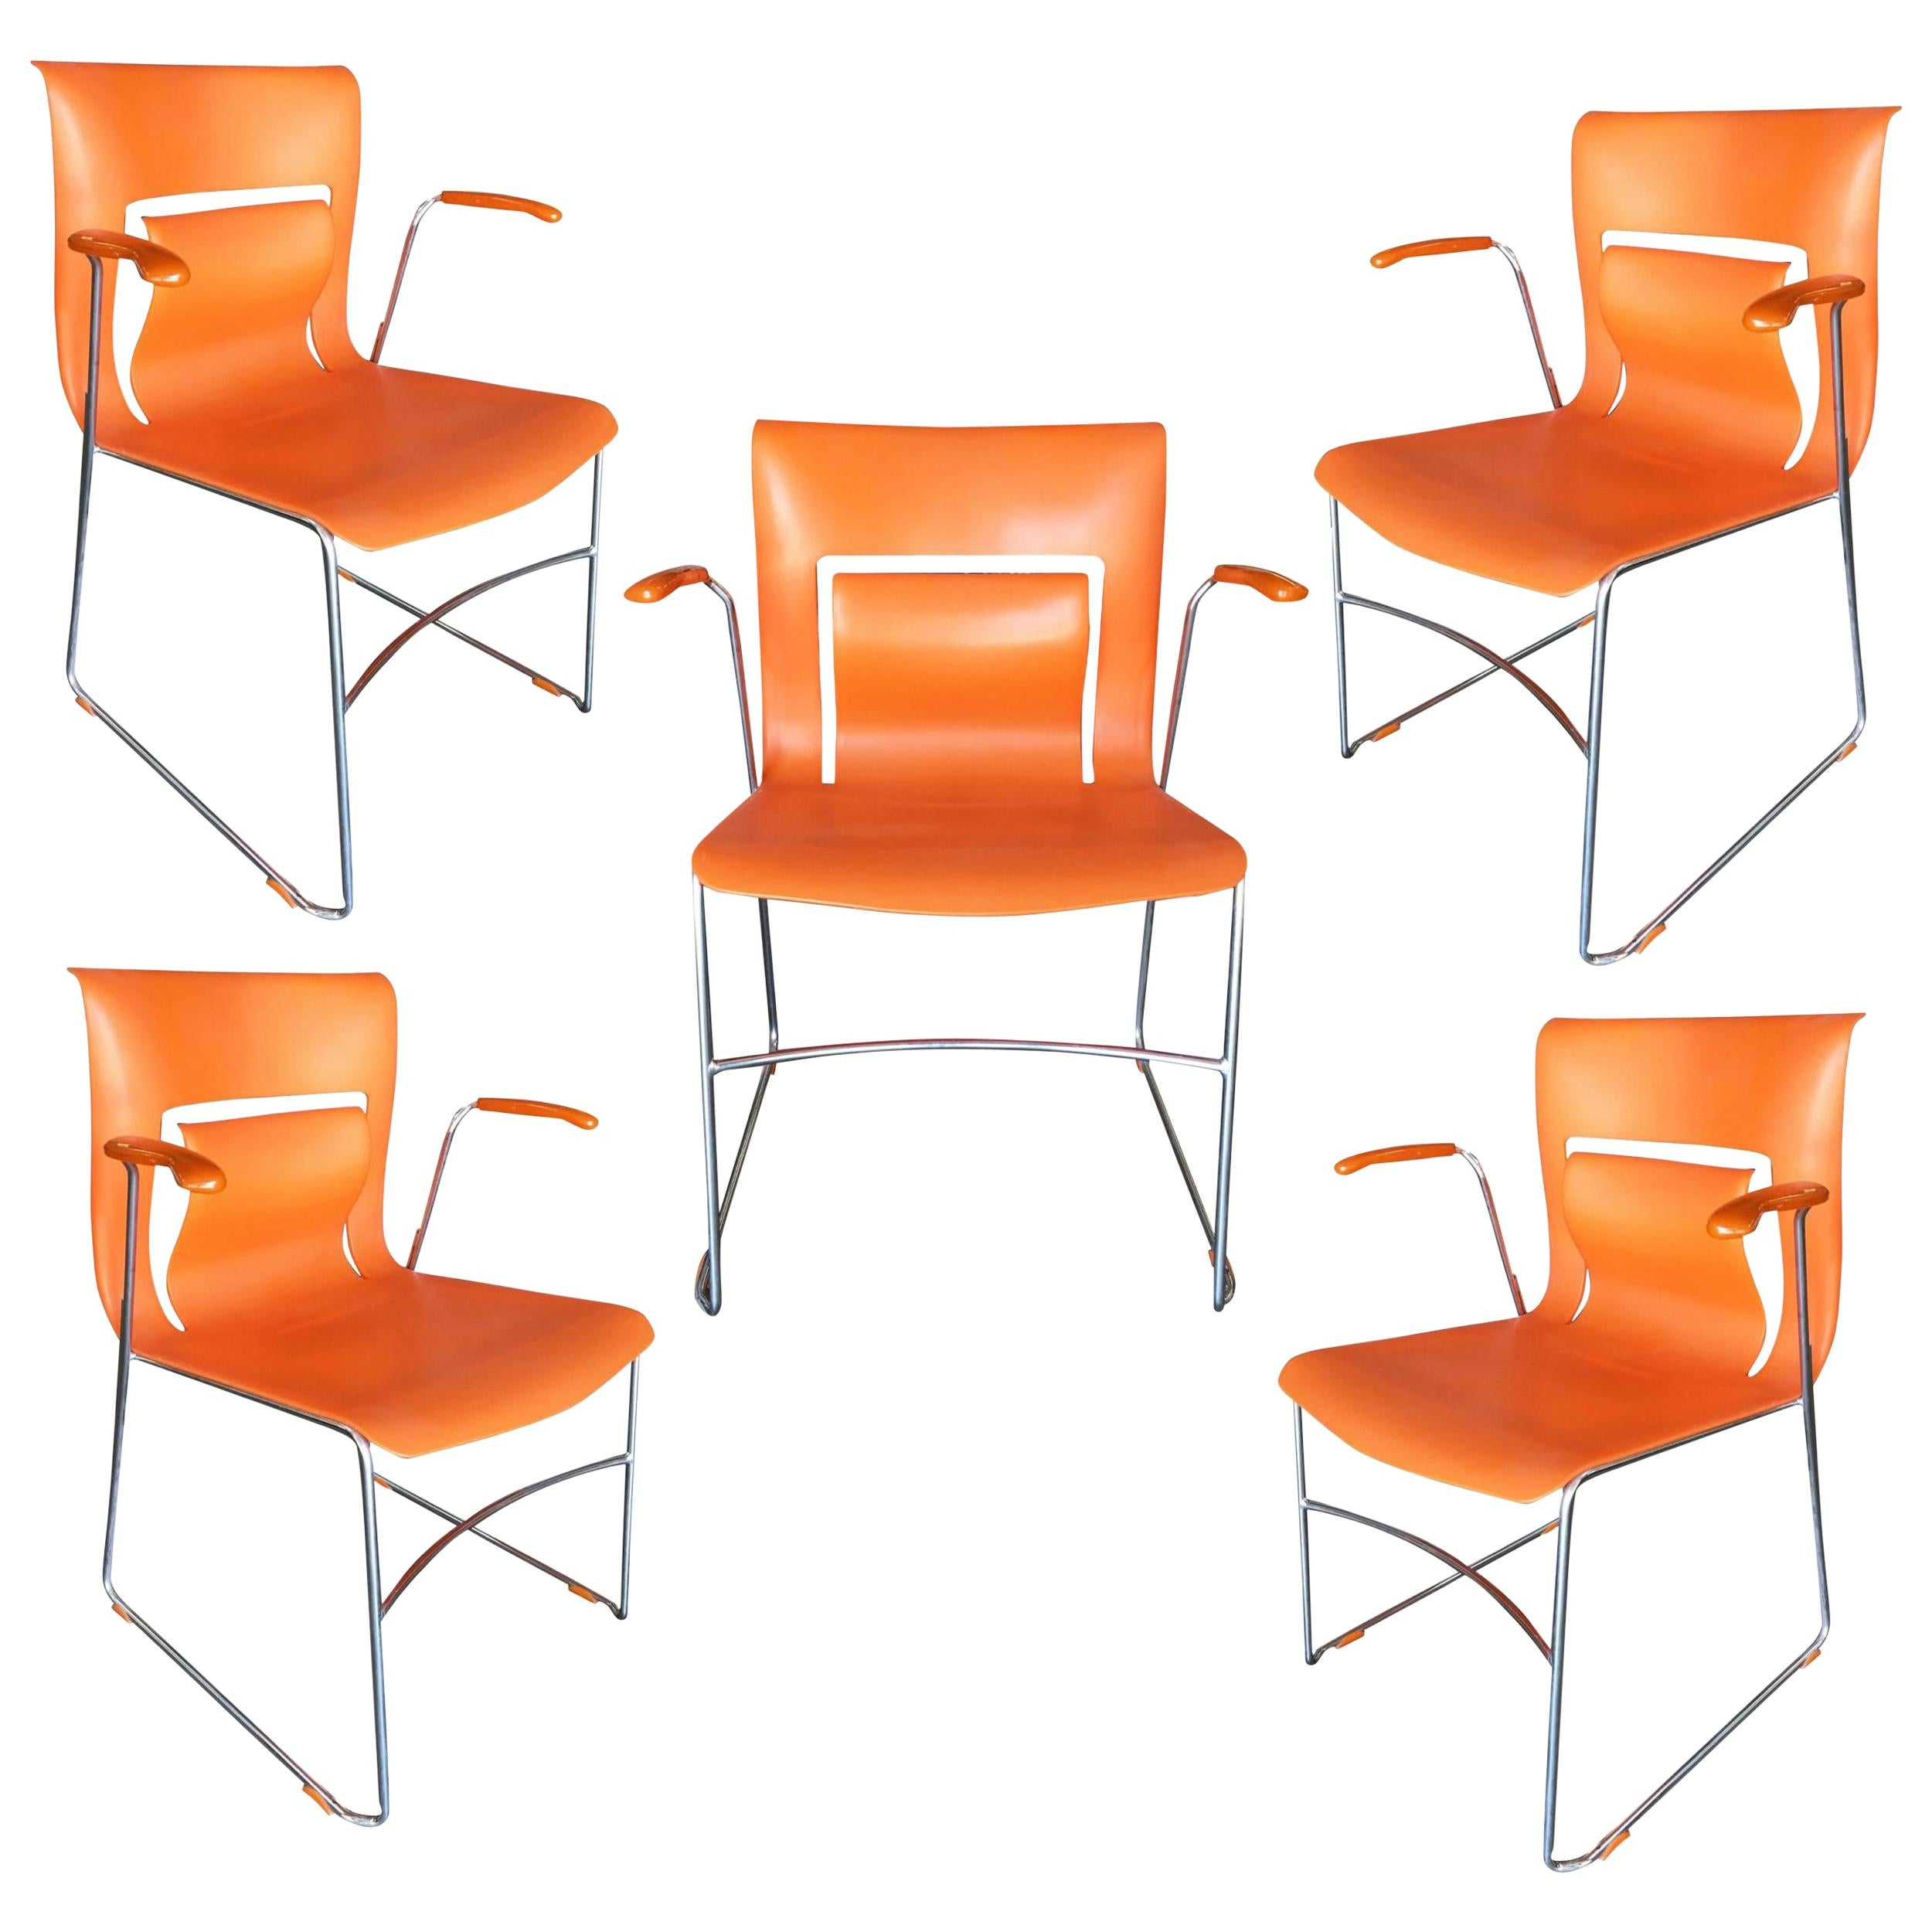 Sets, Rare Orange Stylex "Rythm" Armchair by Sva Cvek, Sets of 5